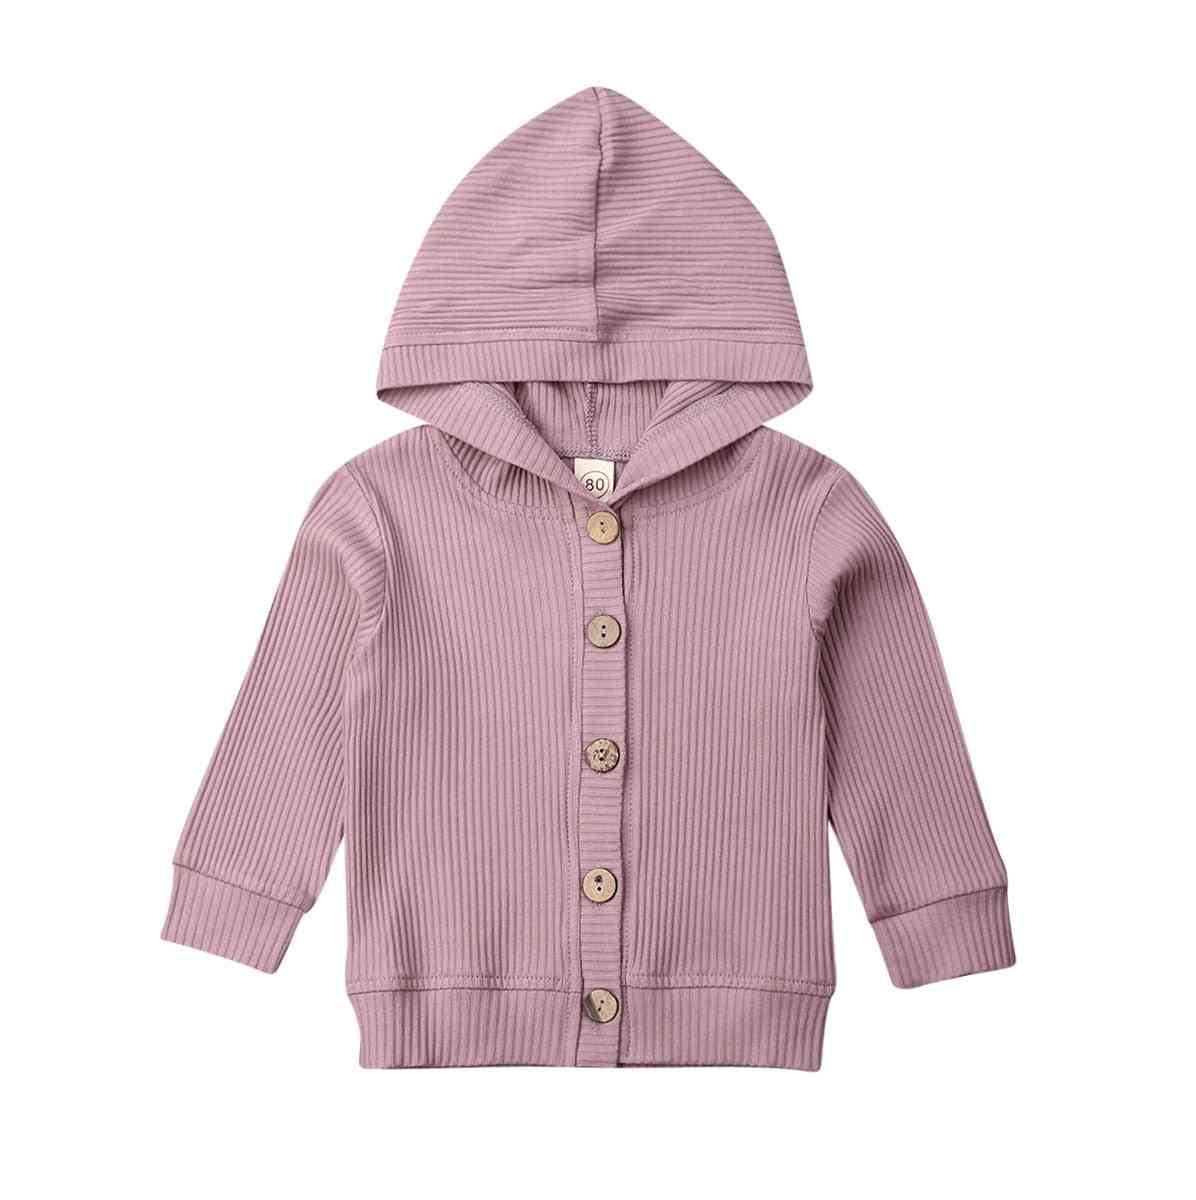 0-24 m otoño infantil bebé niña manga larga abrigo de punto chaqueta outwear tops